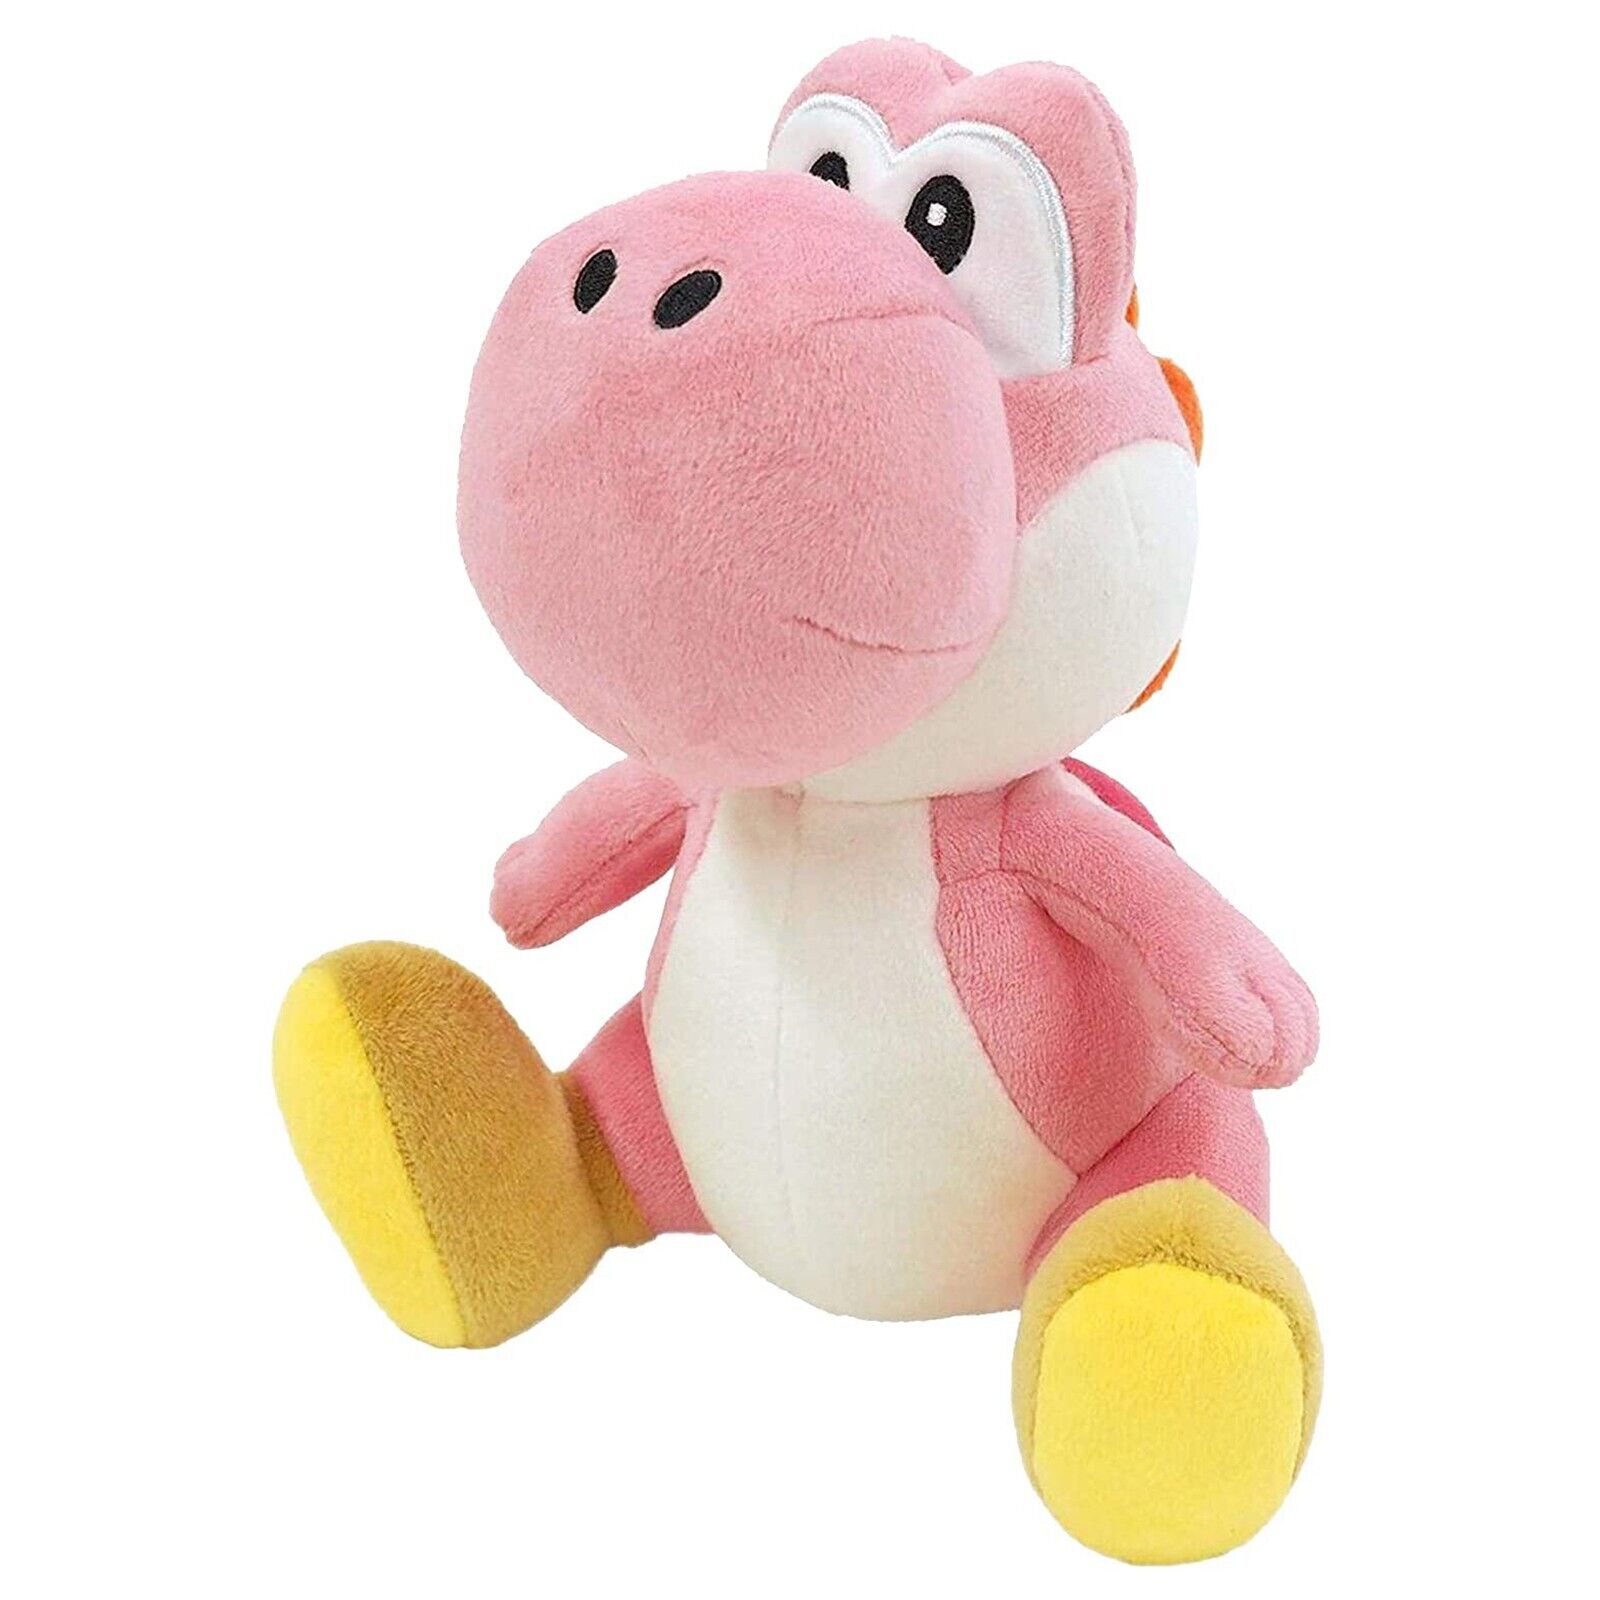 Little Buddy Super Mario Pink Yoshi 8 Inch Plush Figure NEW IN STOCK